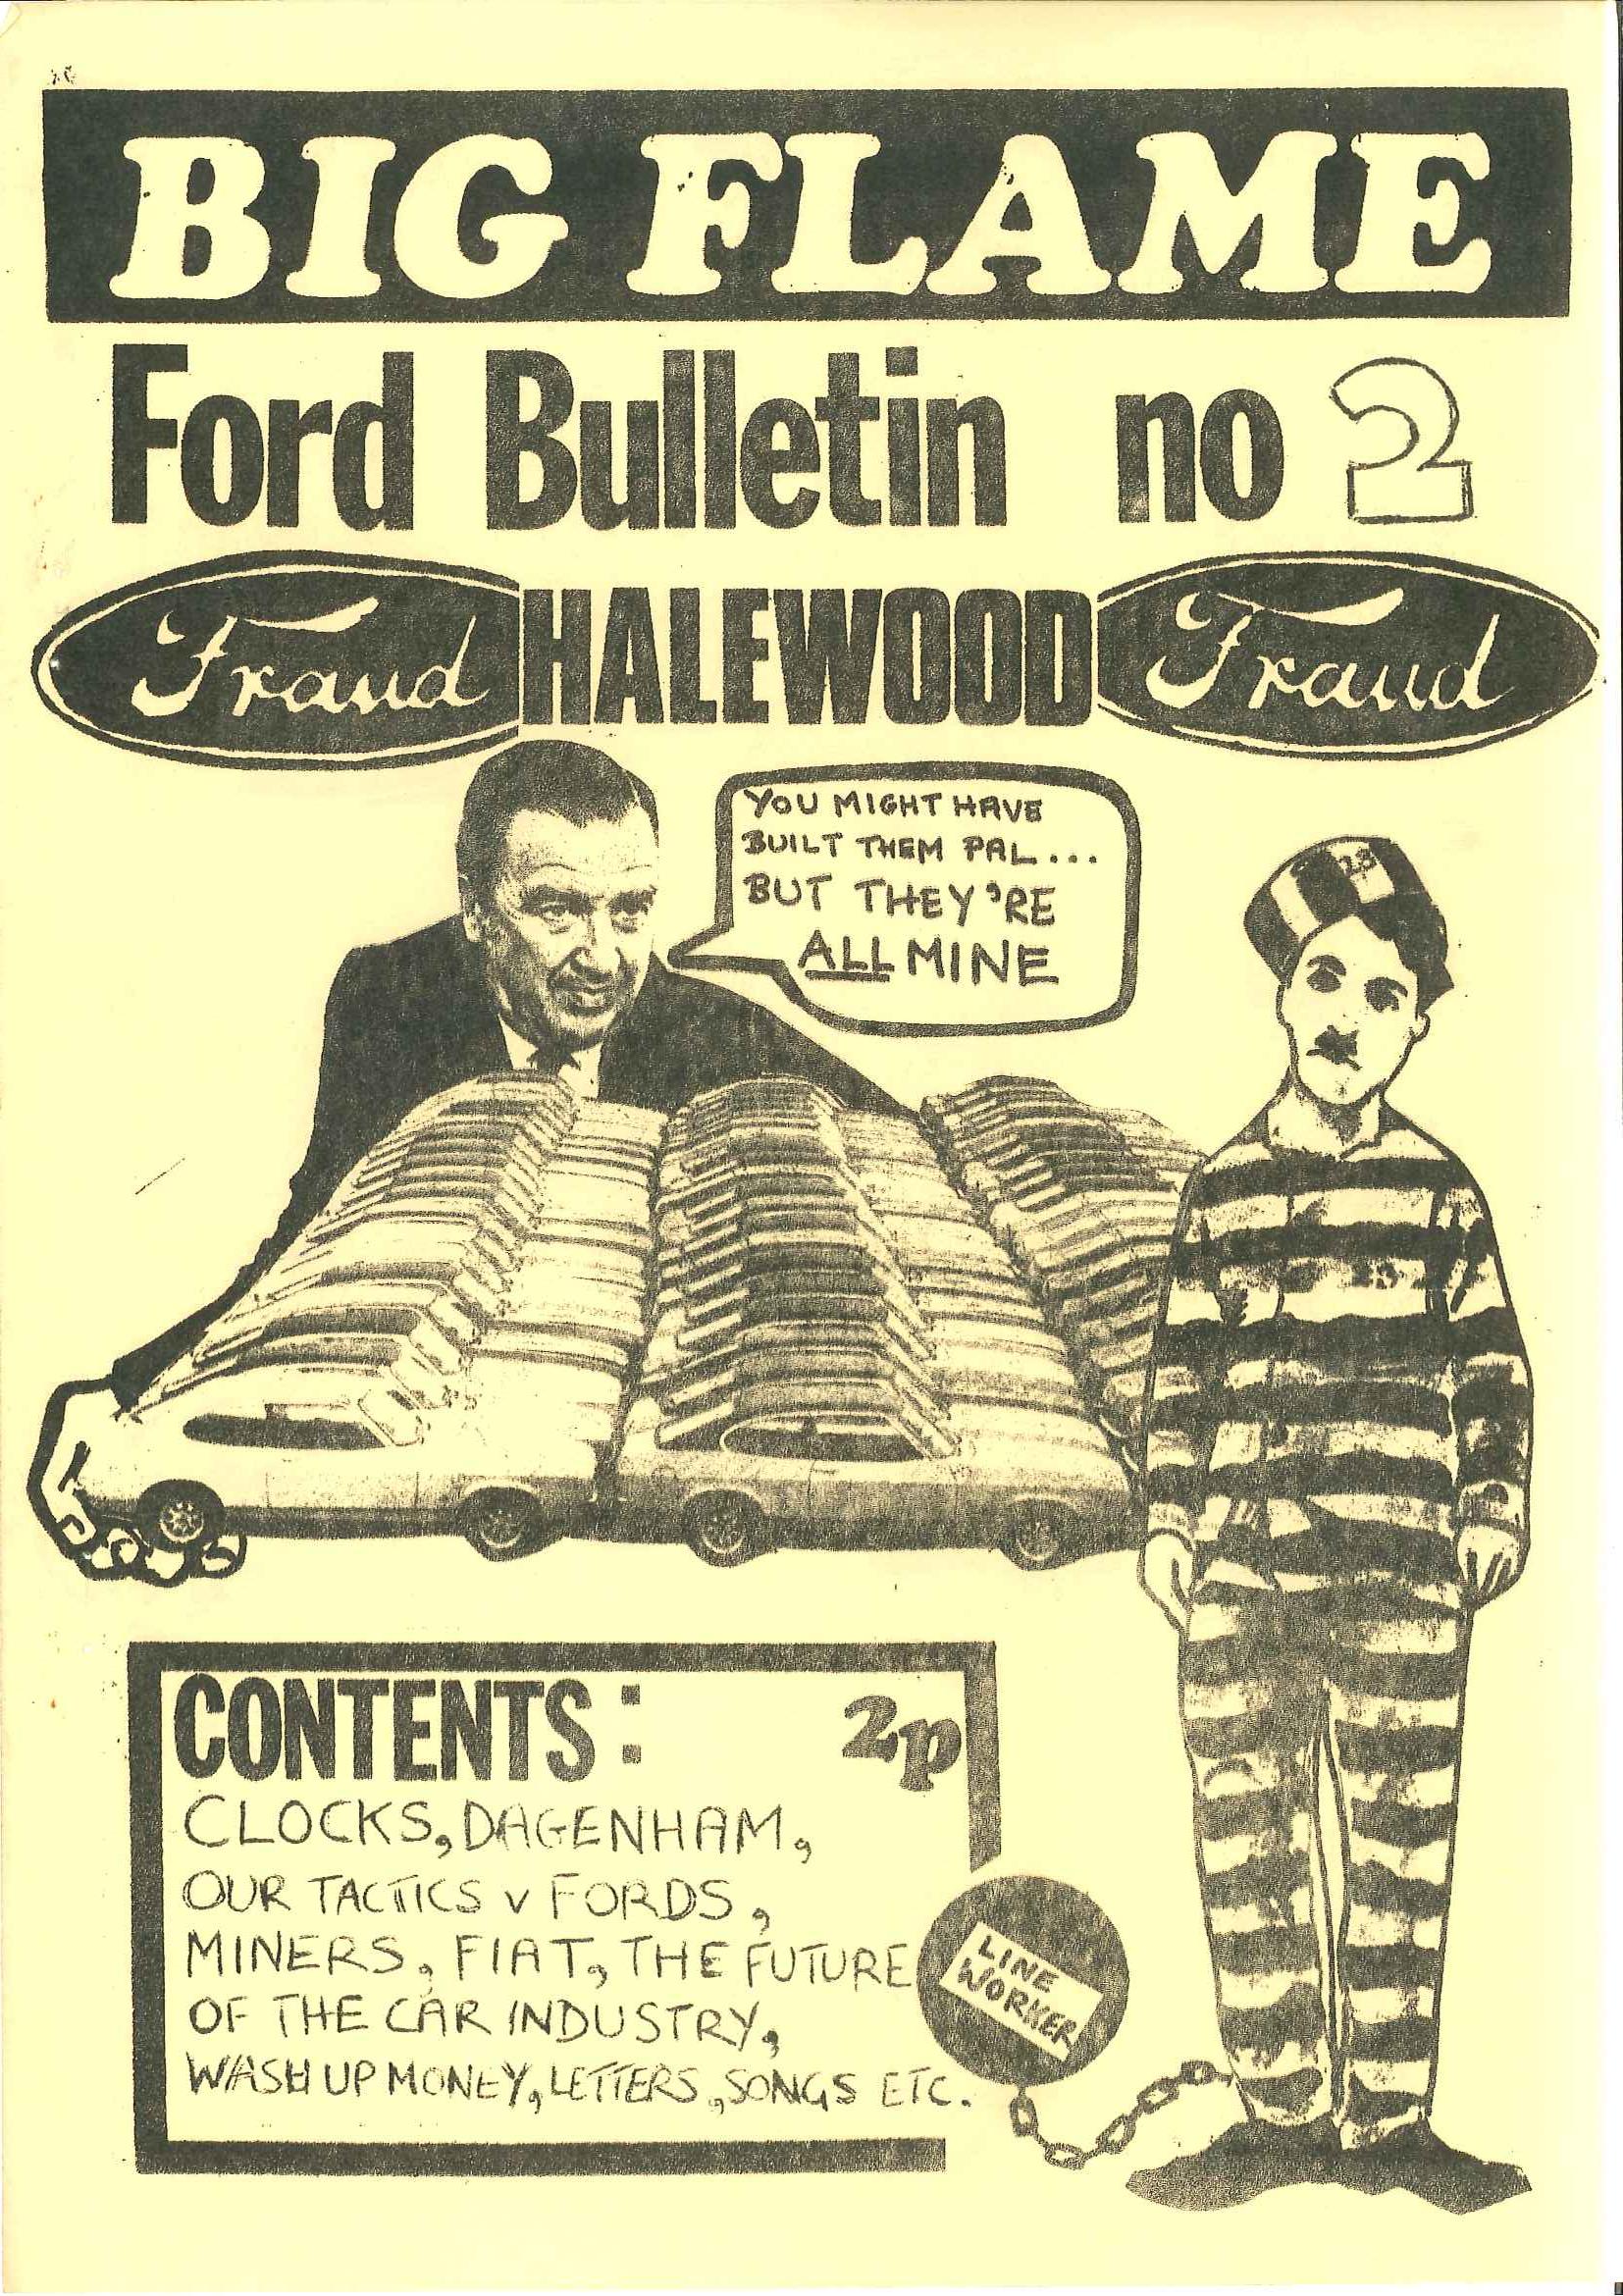 Ford halewood postcode #6